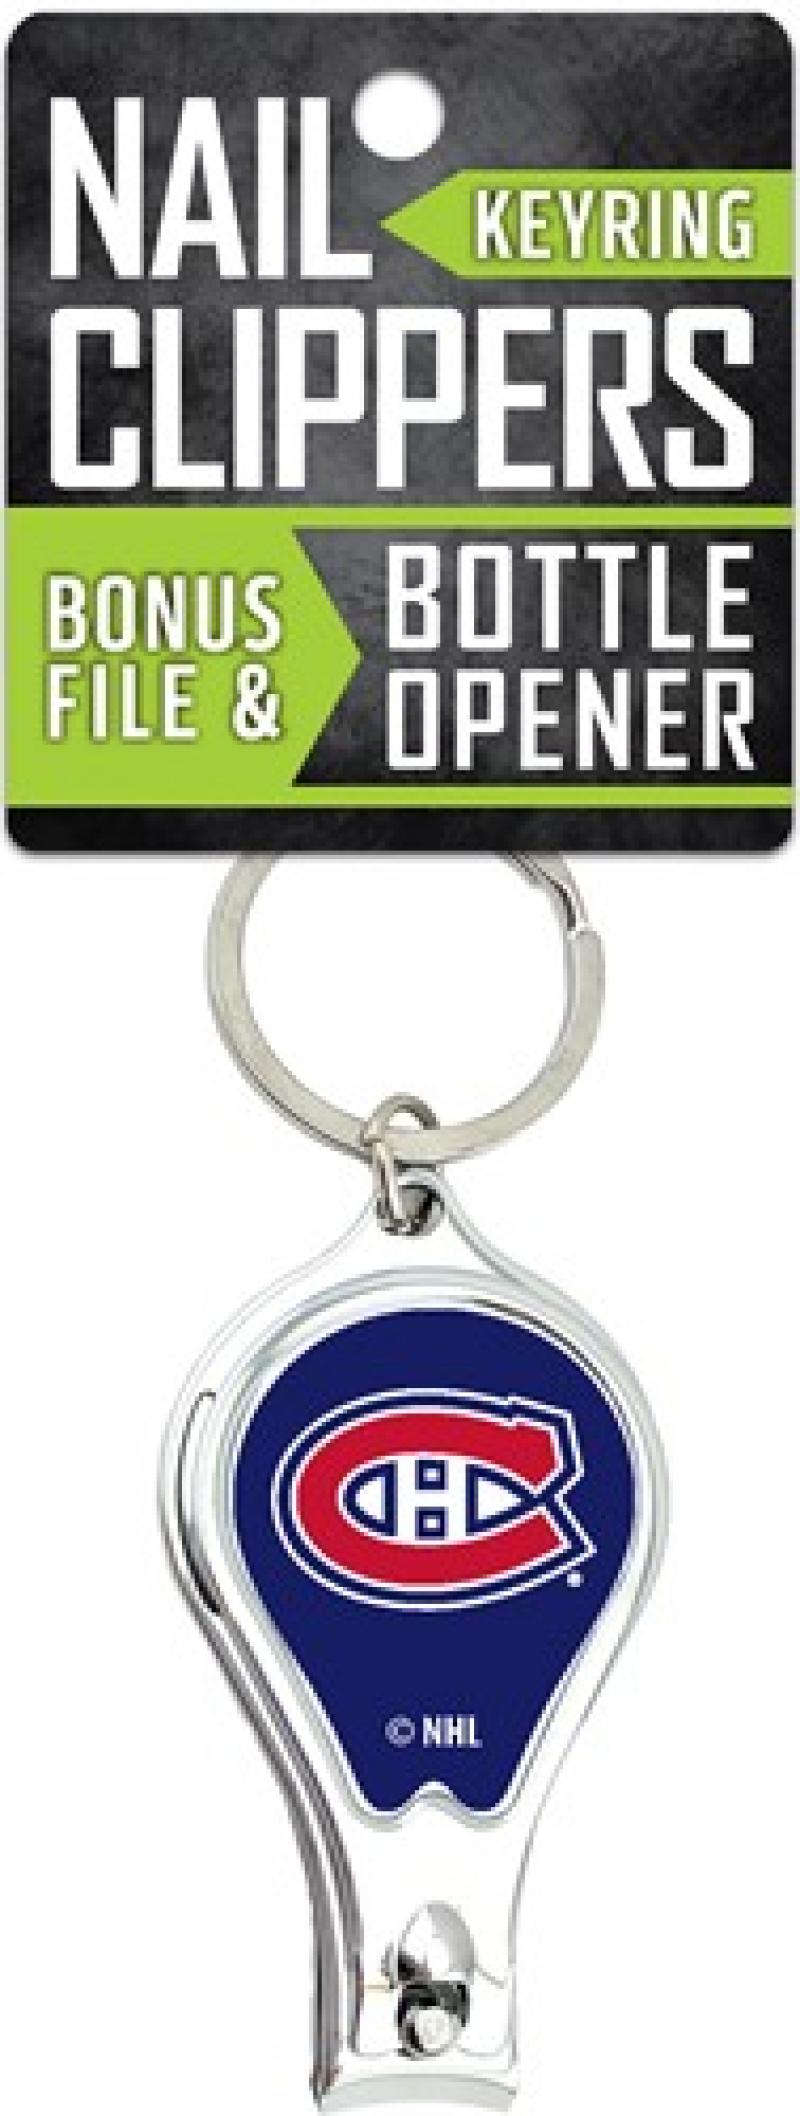 Montreal Canadiens Nail Clipper Keyring w/Bonus File & Bottle Opener Image 1